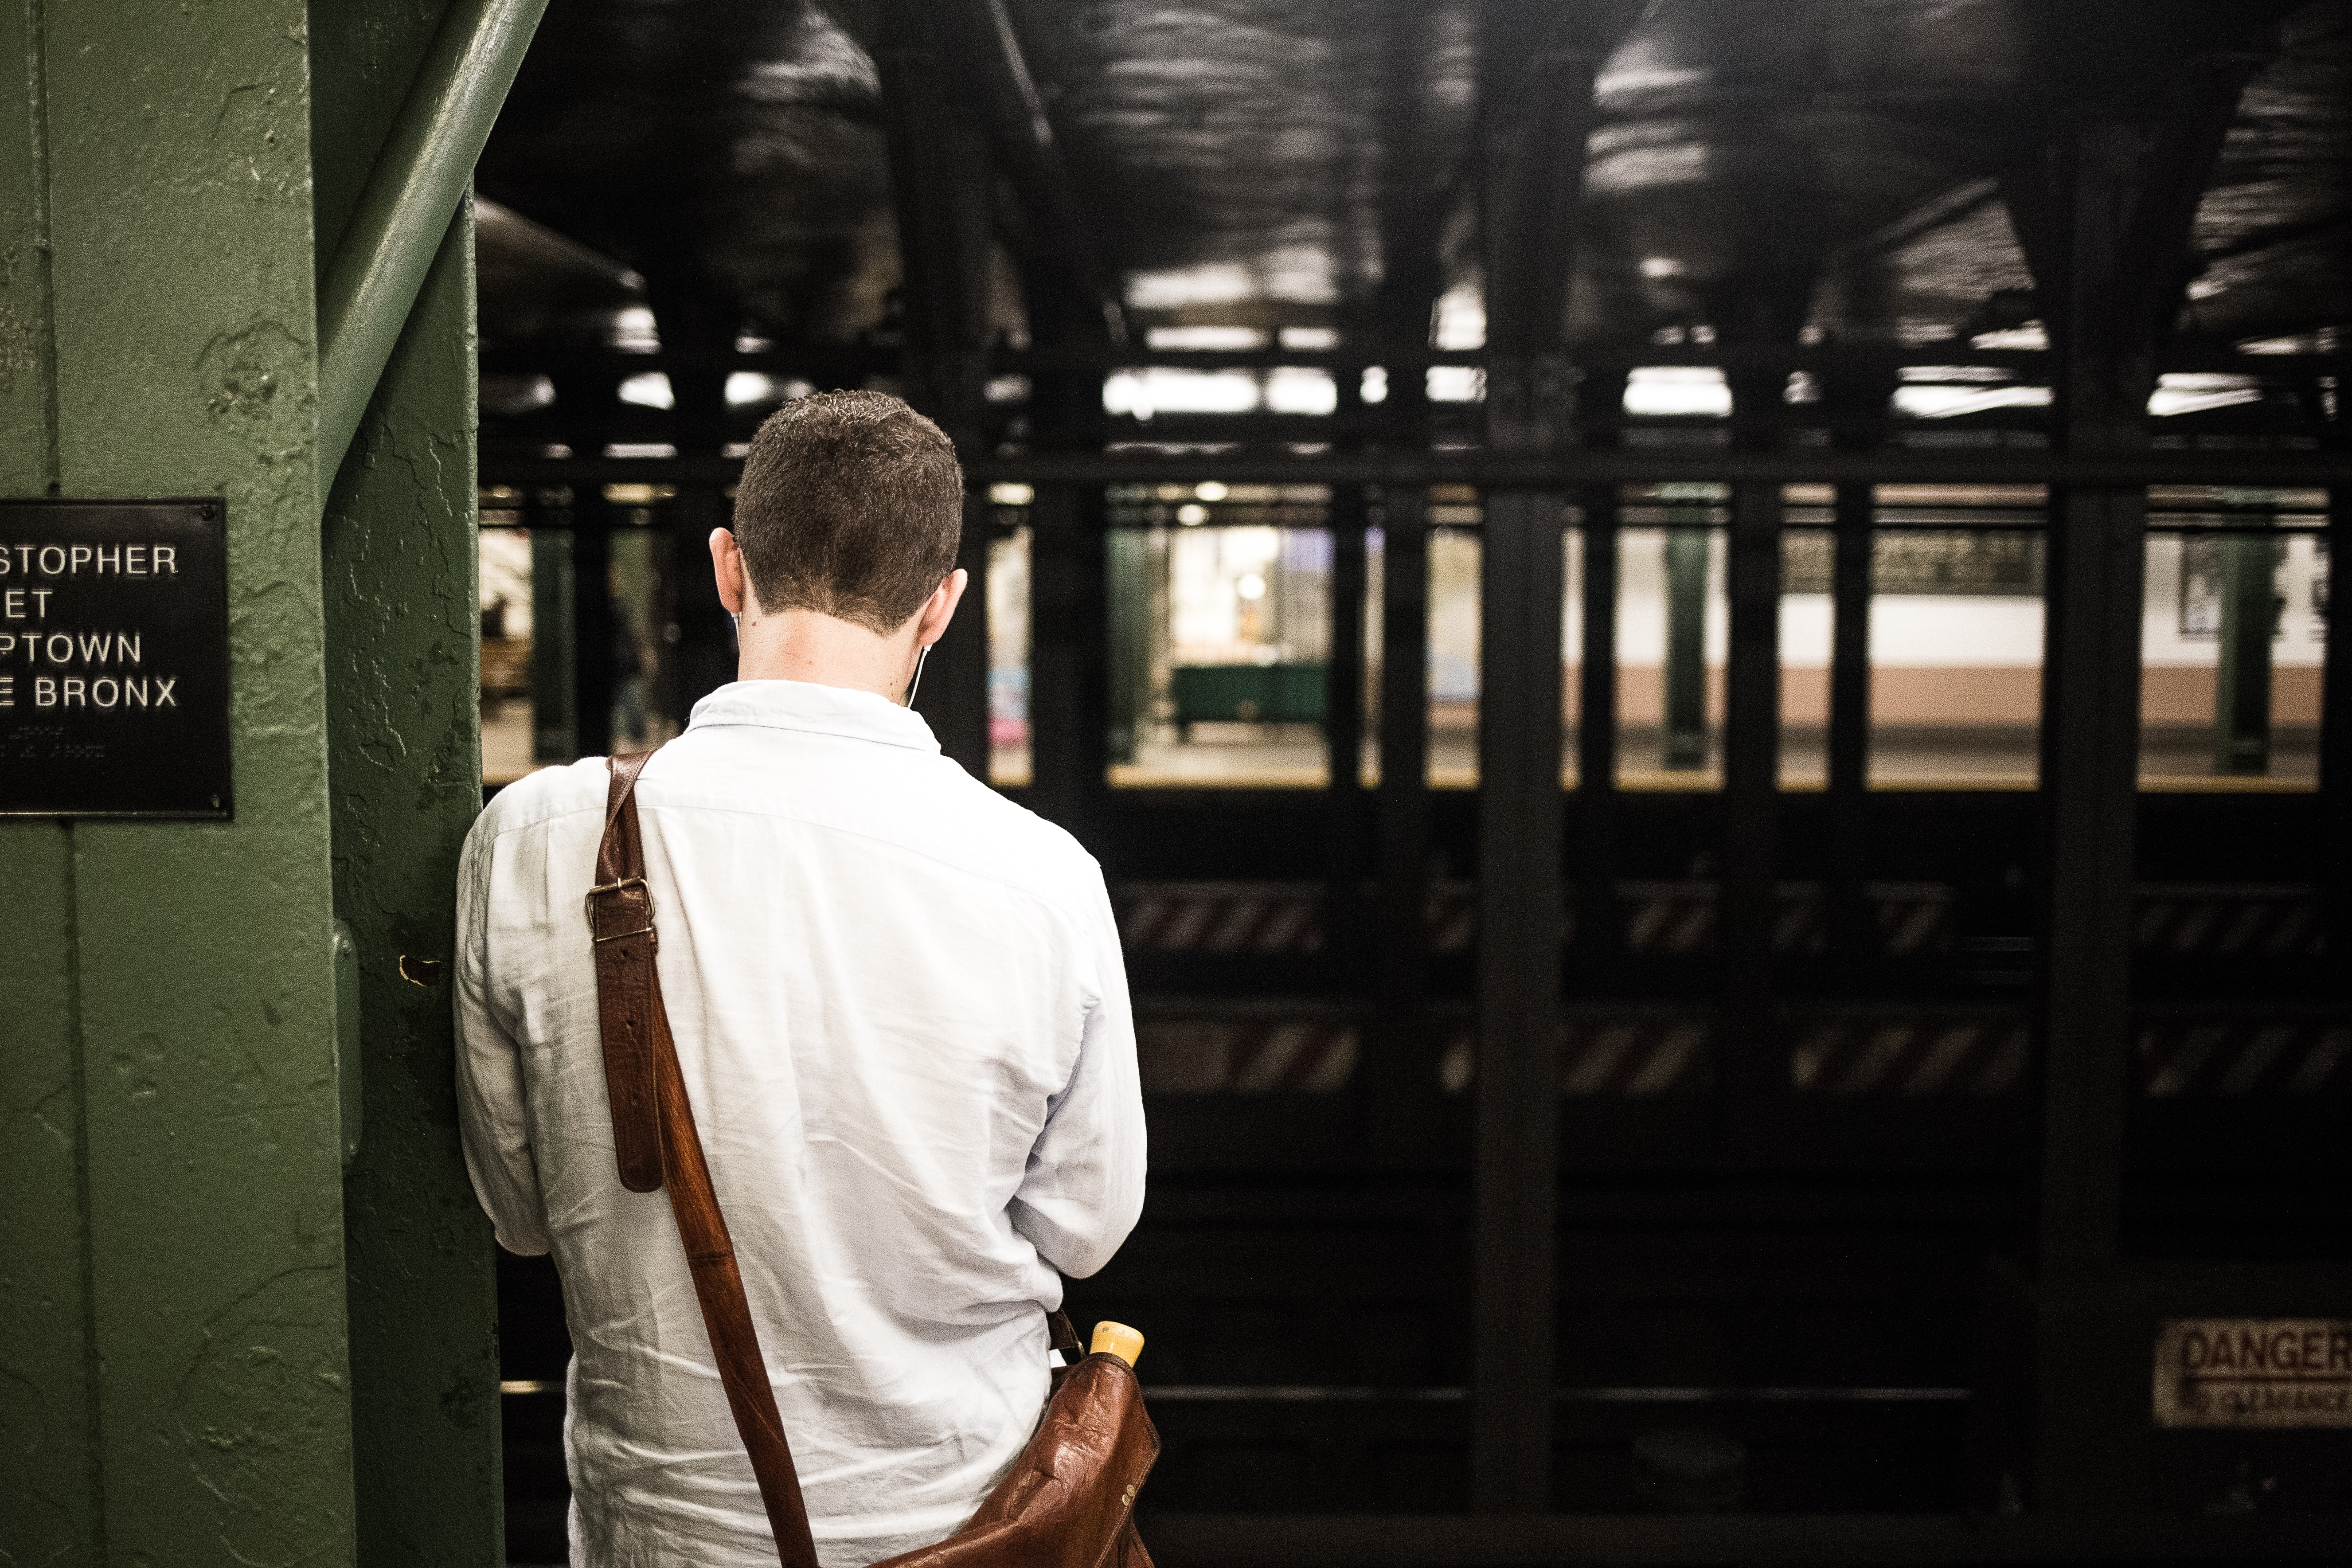 man wearing a white dress shirt waiting at the train station